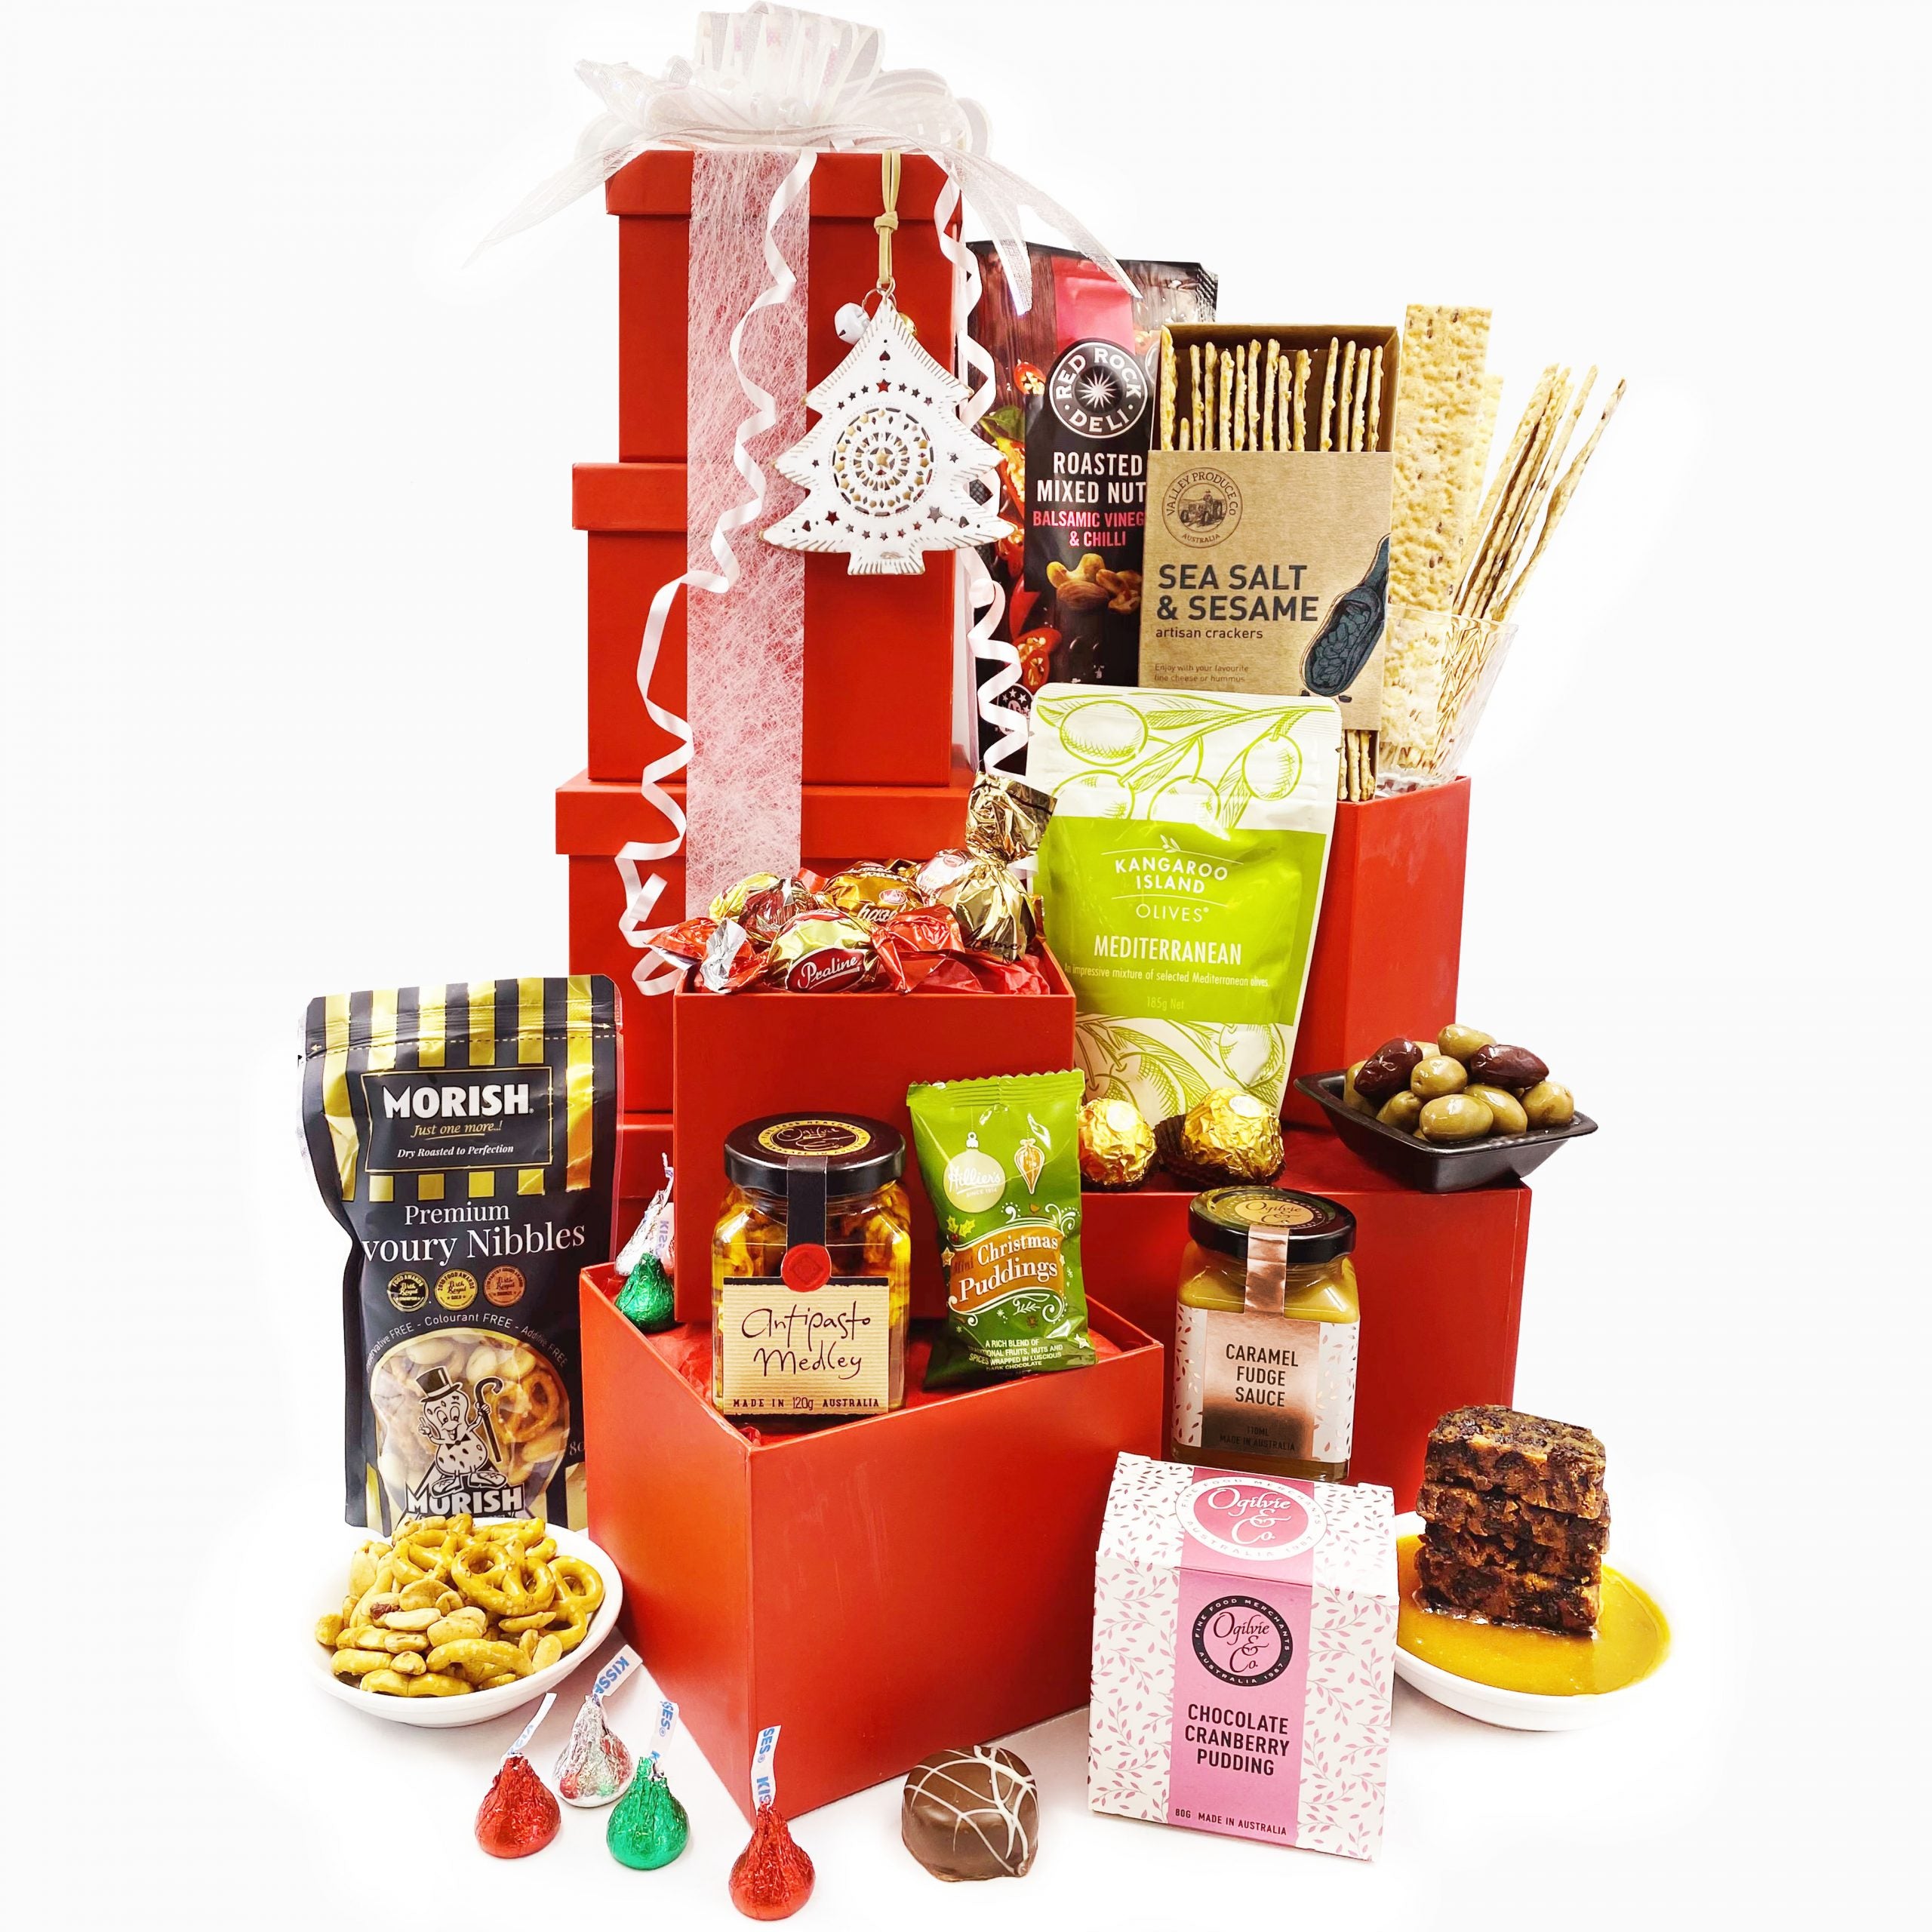 Healthy Gift Basket Deluxe by GourmetGiftBaskets.com